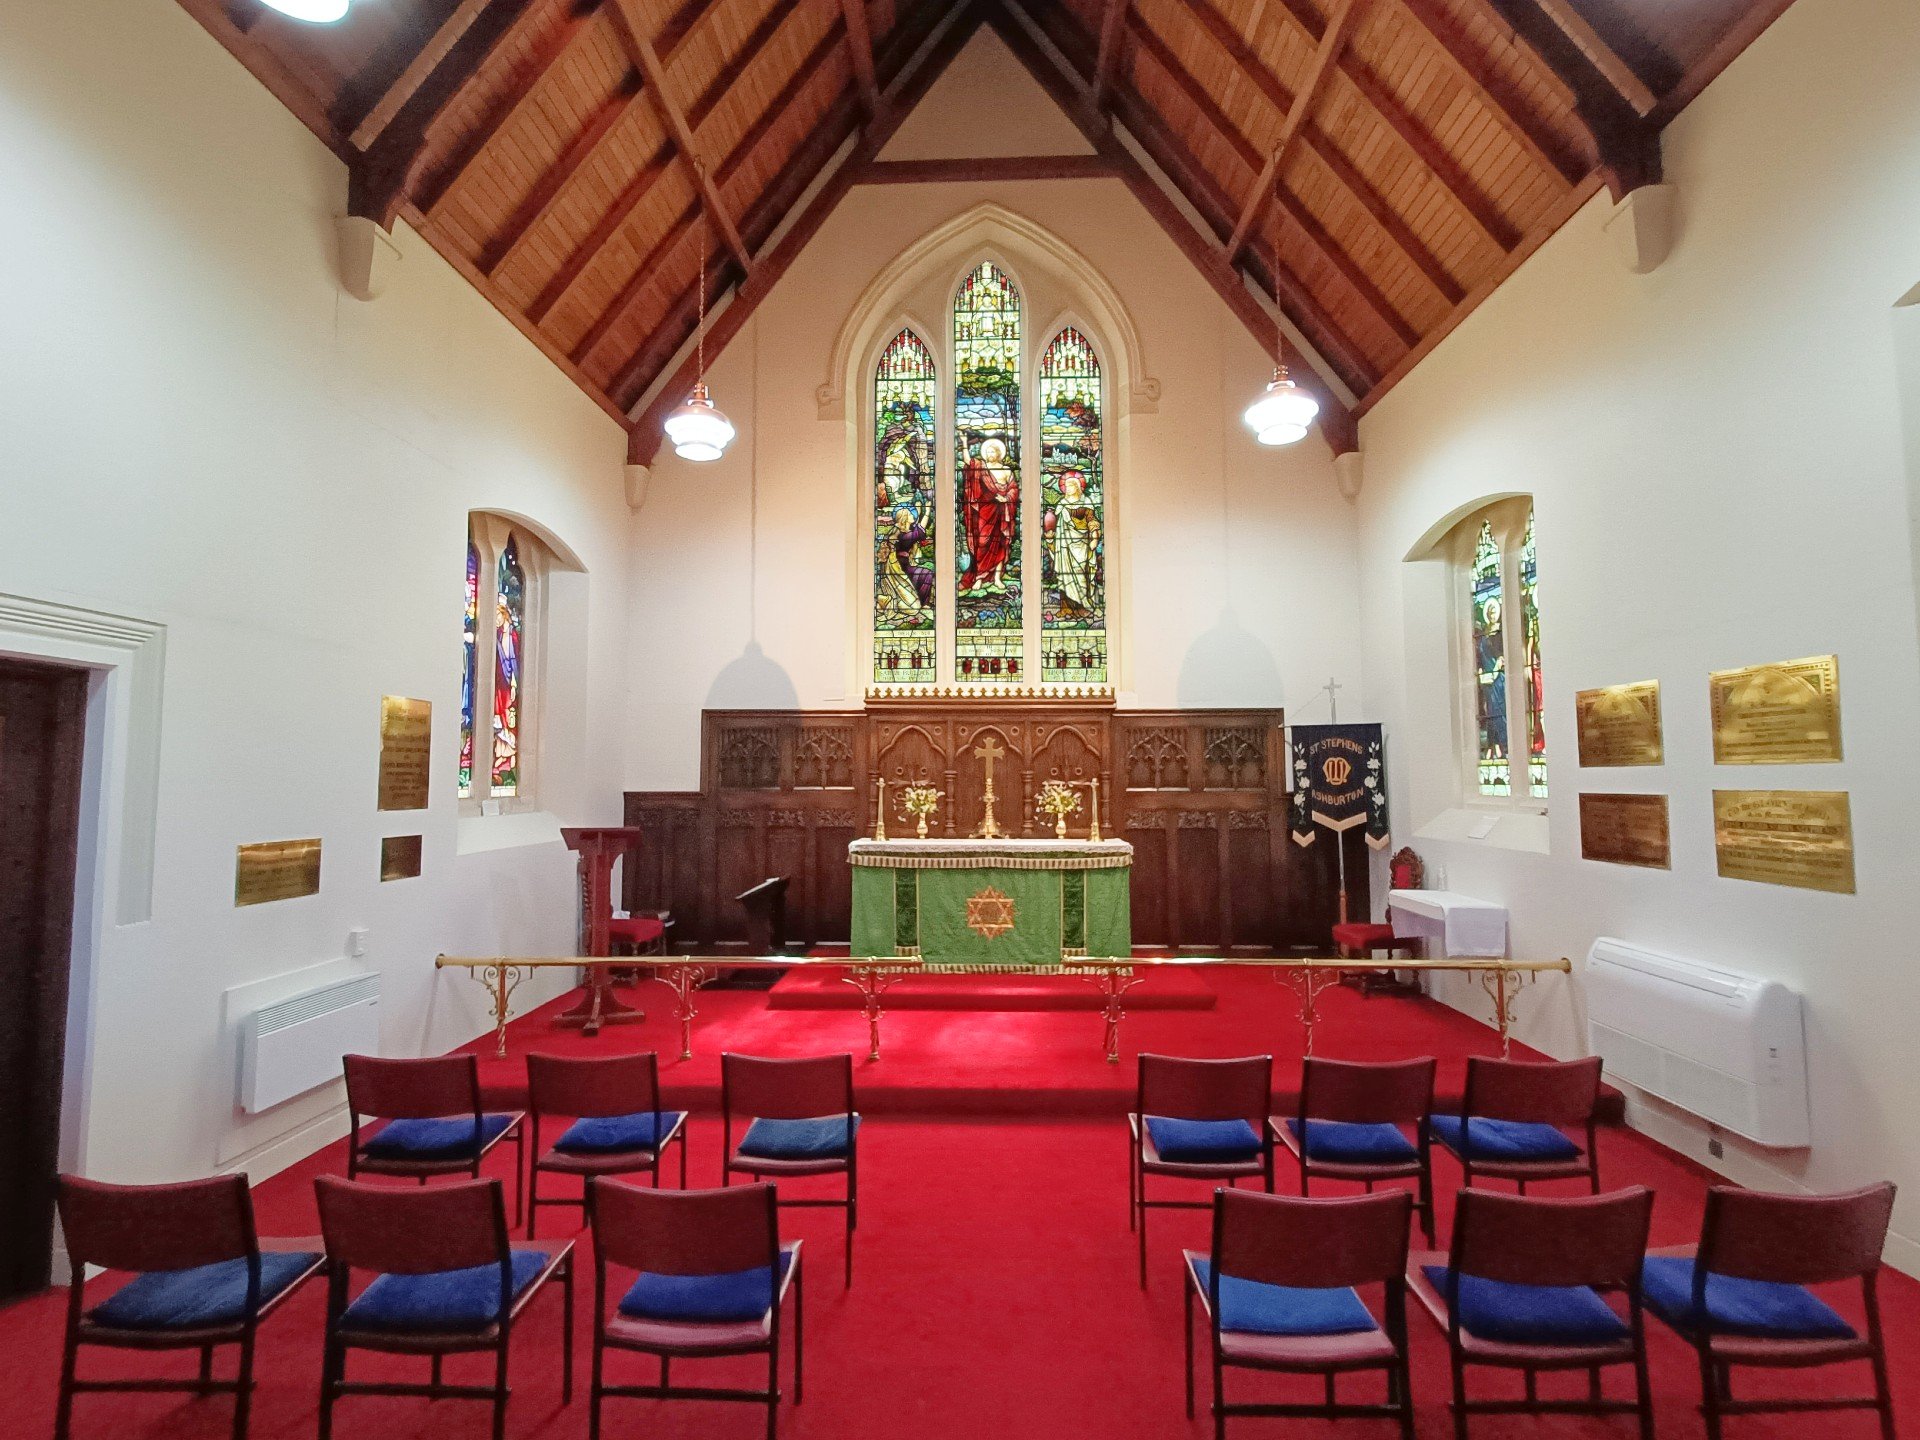 St Stephens Church Chapel interior